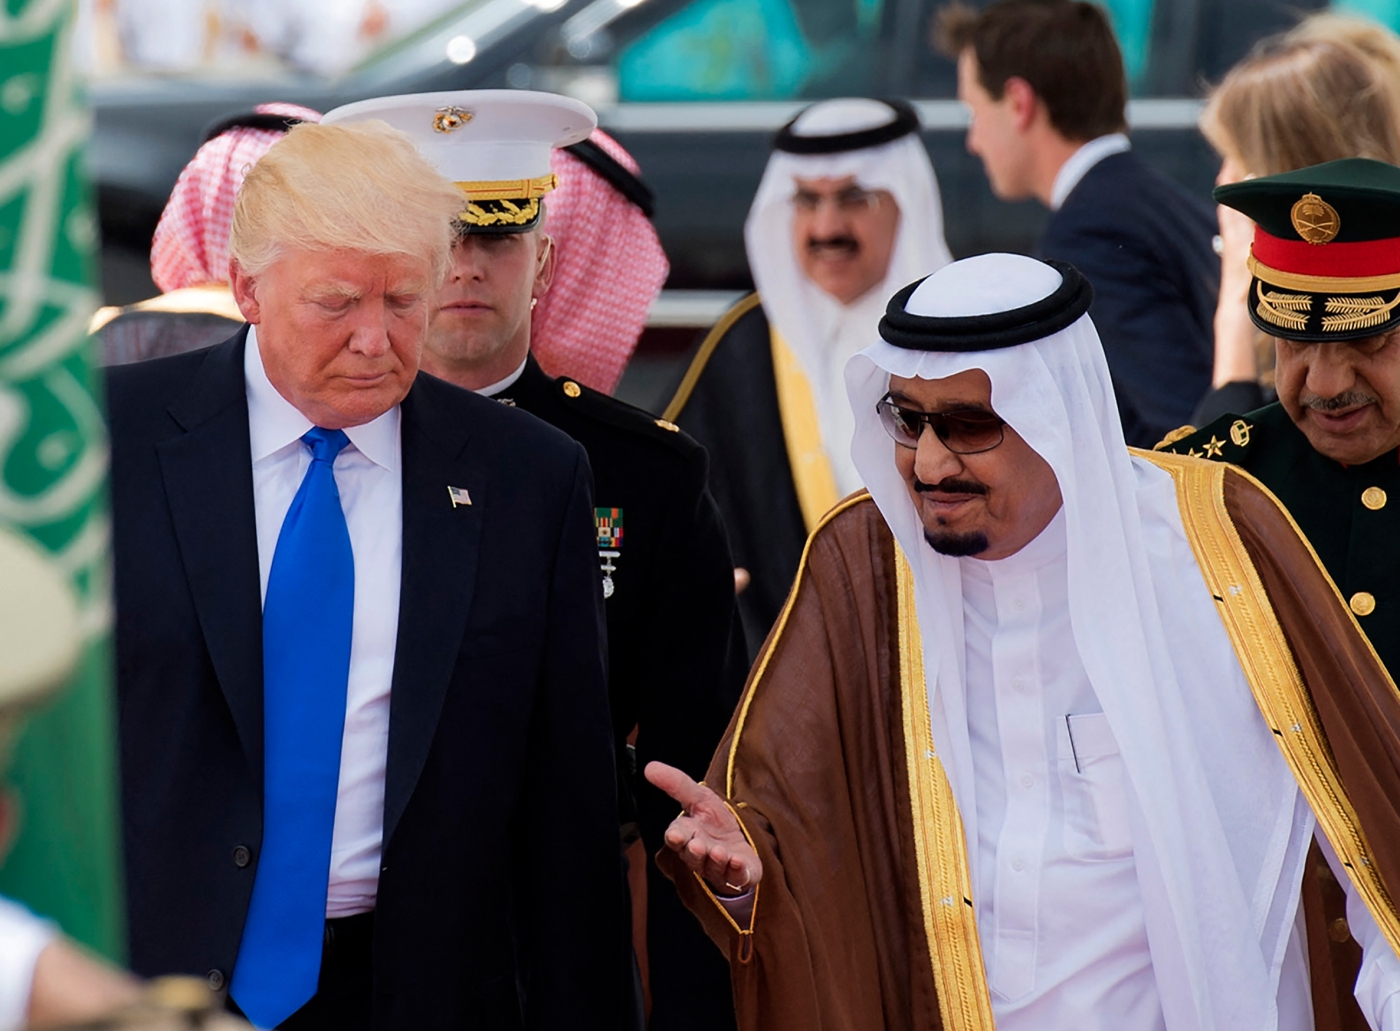 US President Donald Trump and Saudi King Salman bin Abdulaziz al-Saud take part in an arrival ceremony at the Saudi Royal Court in Riyadh on 20 May 2017.